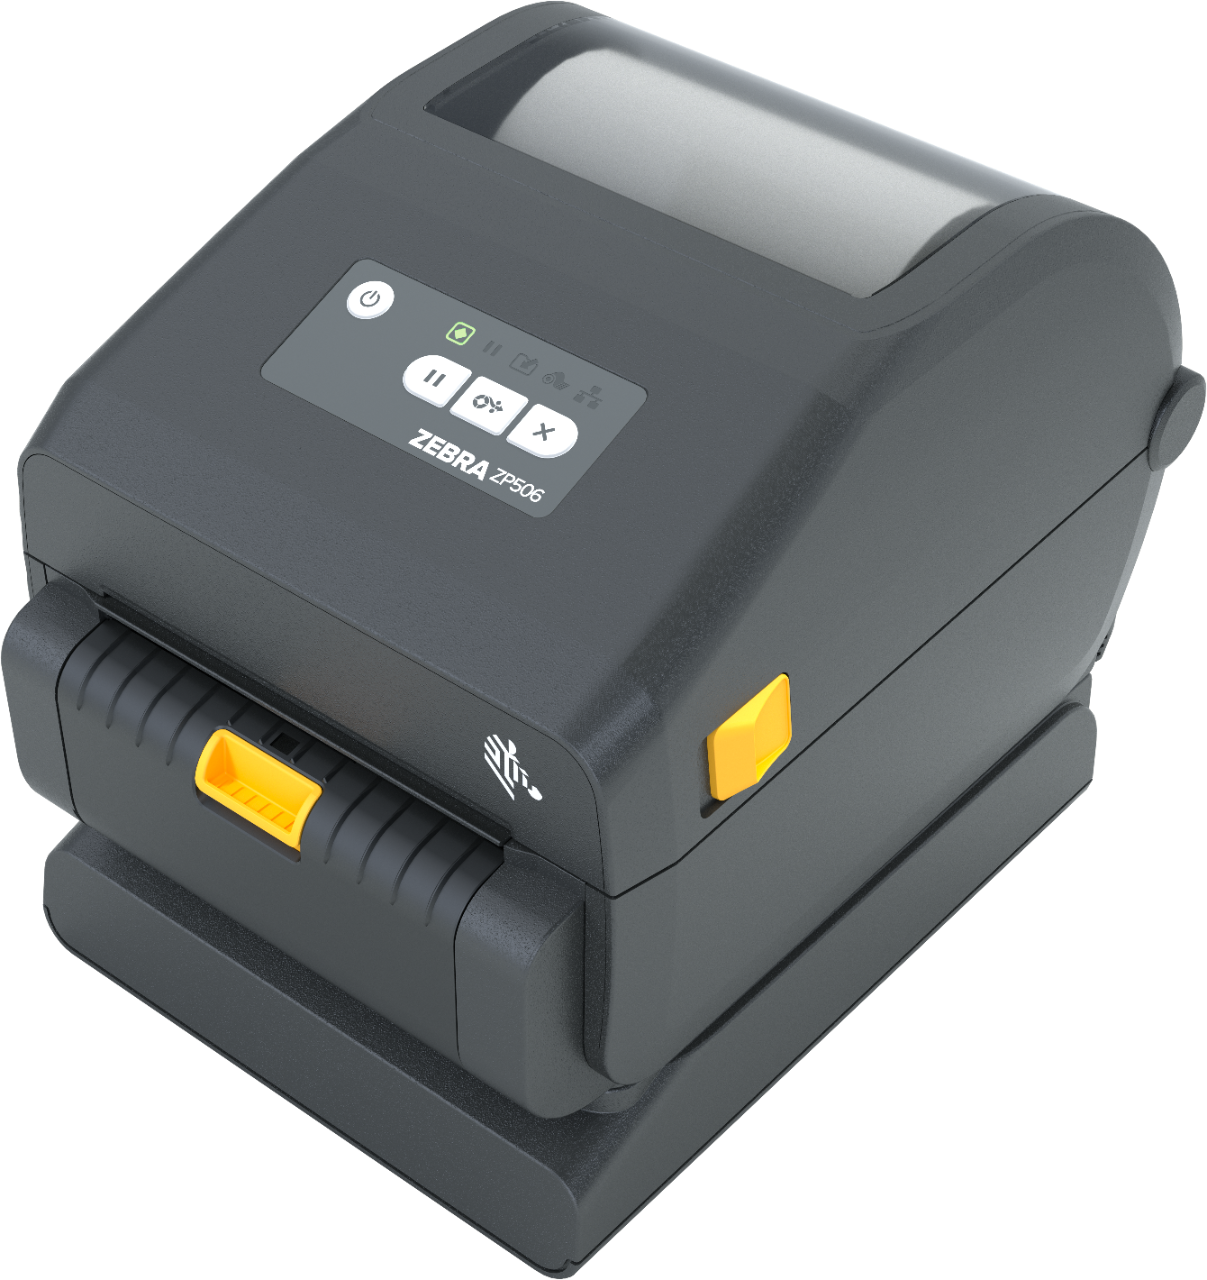 ZP506 impressora desktop